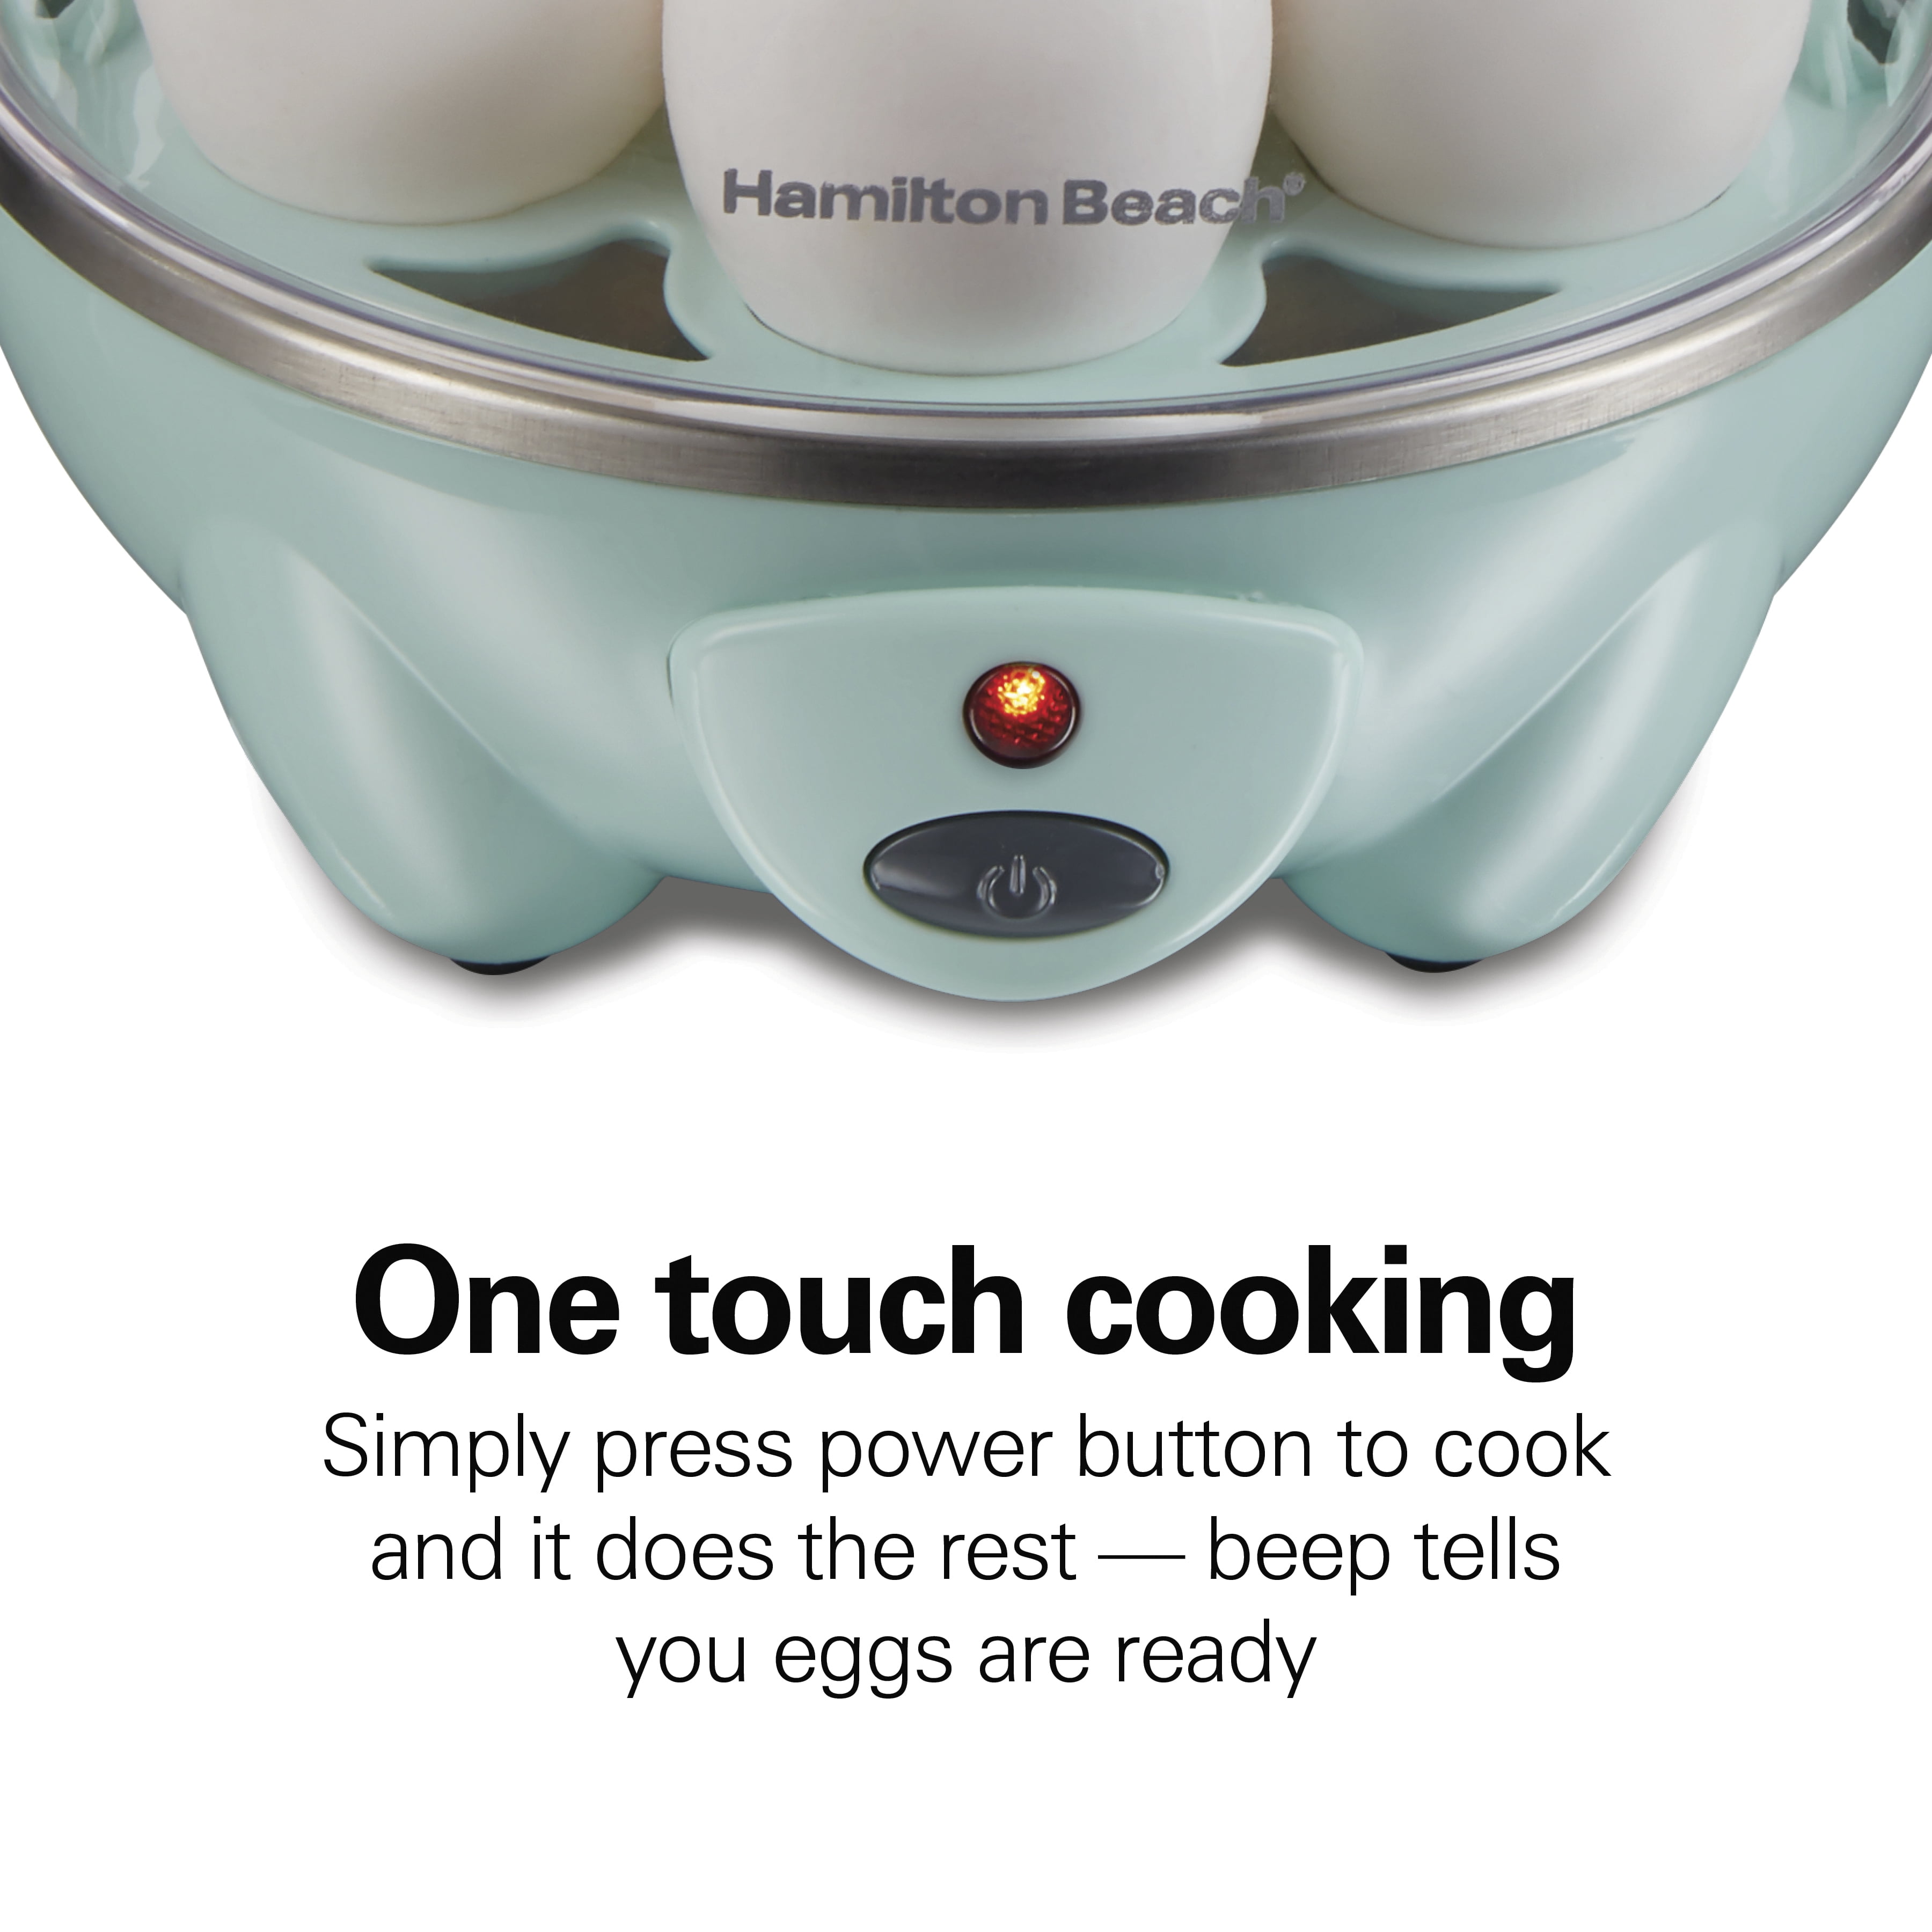 Hamilton Beach 25500 Egg Cooker with Built-In Timer, SleepyChef.com, everything breakfast!